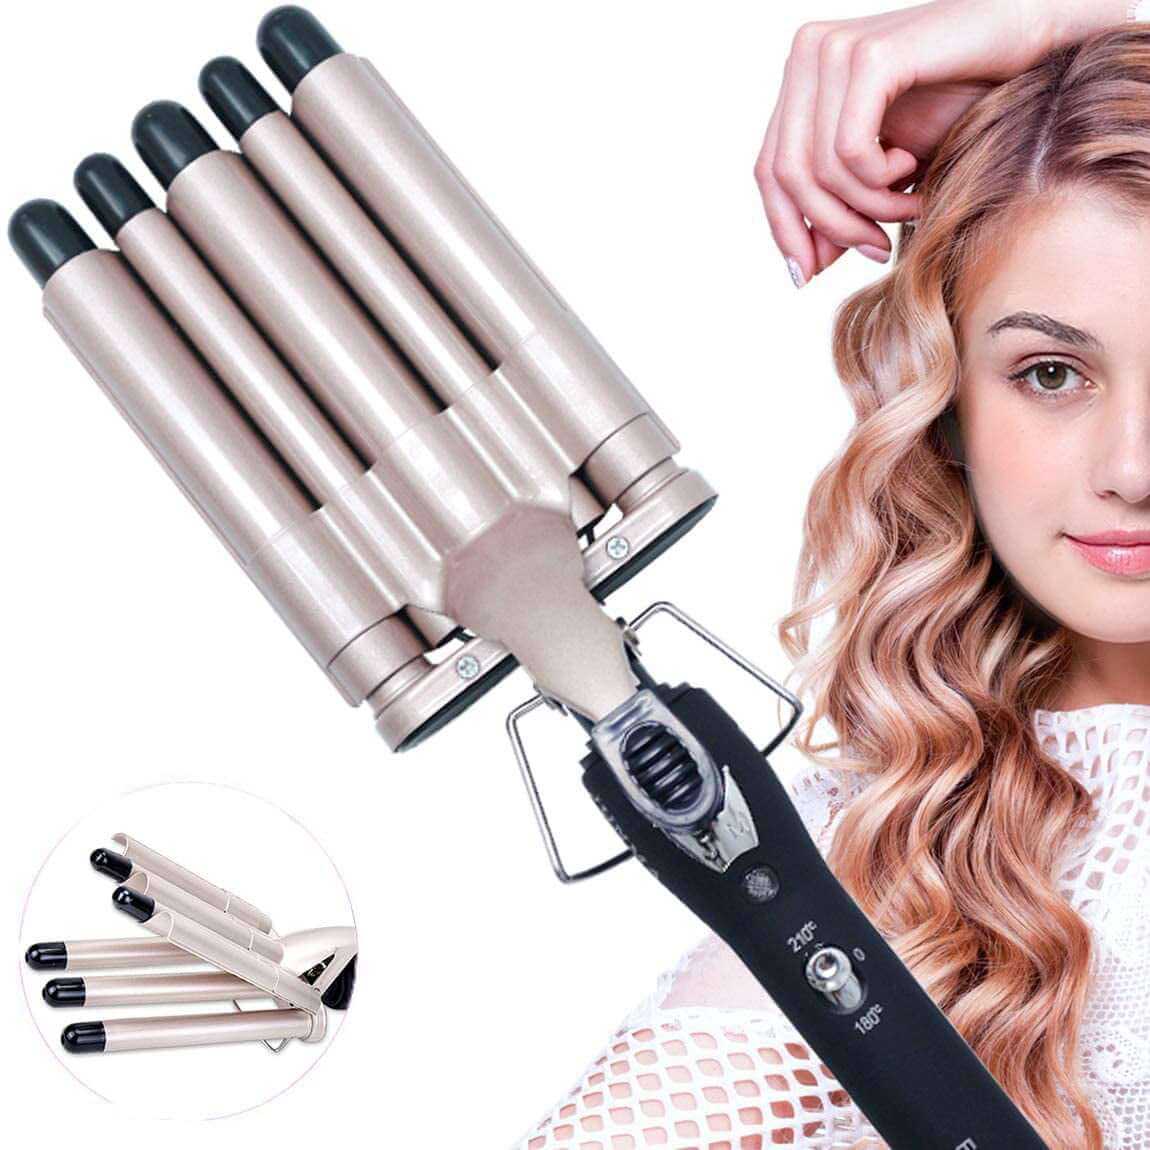 Moehair salon special hair curler / hair iron